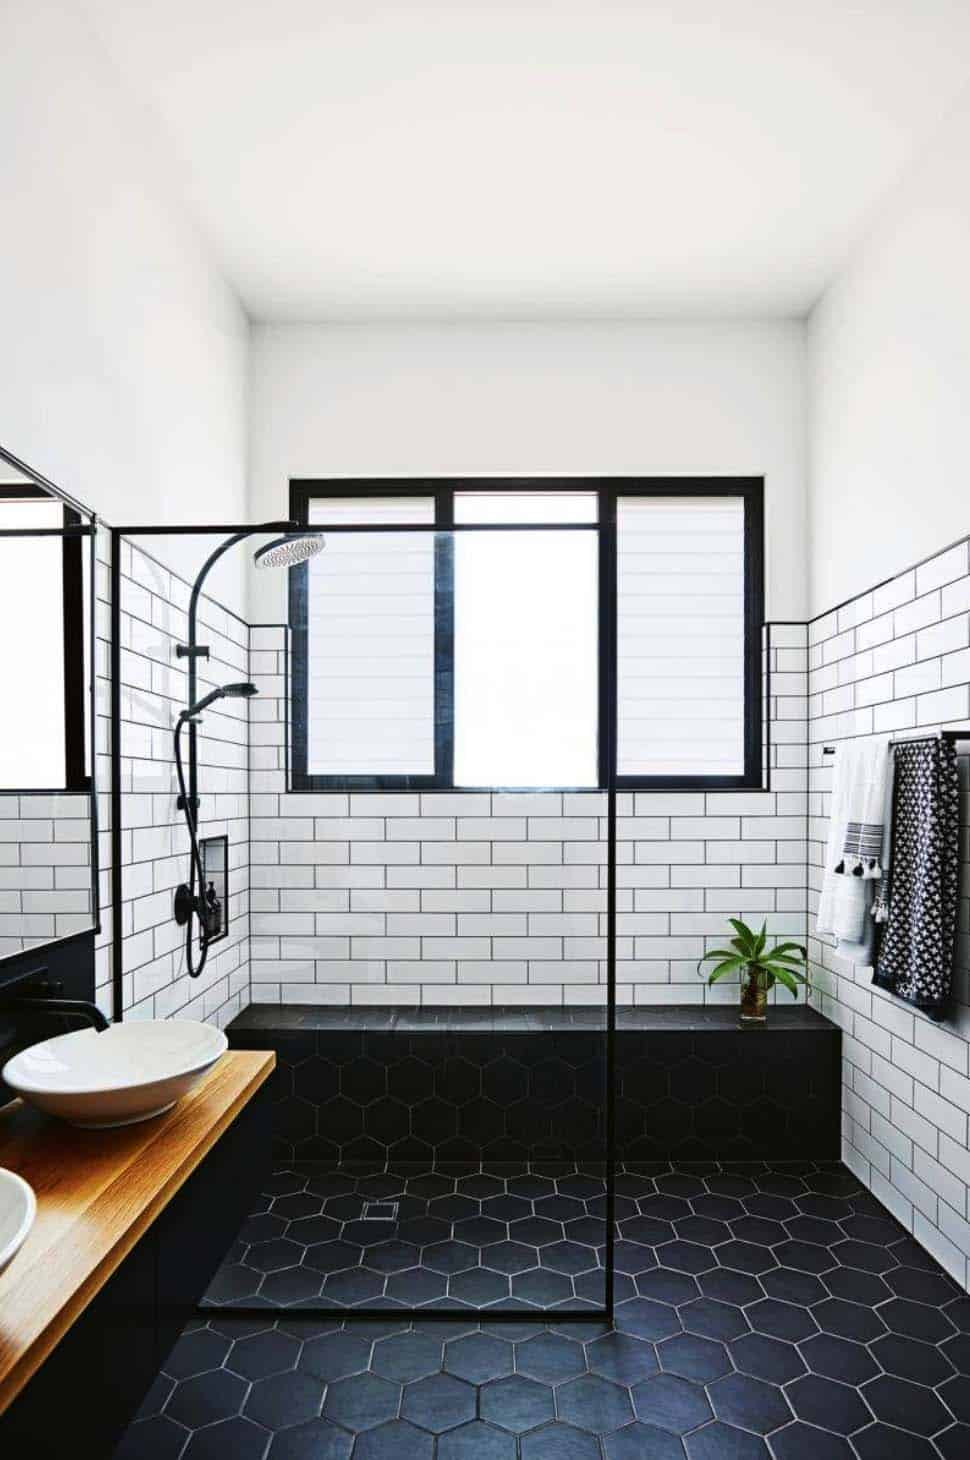 White Bathroom Decor
 25 Incredibly stylish black and white bathroom ideas to